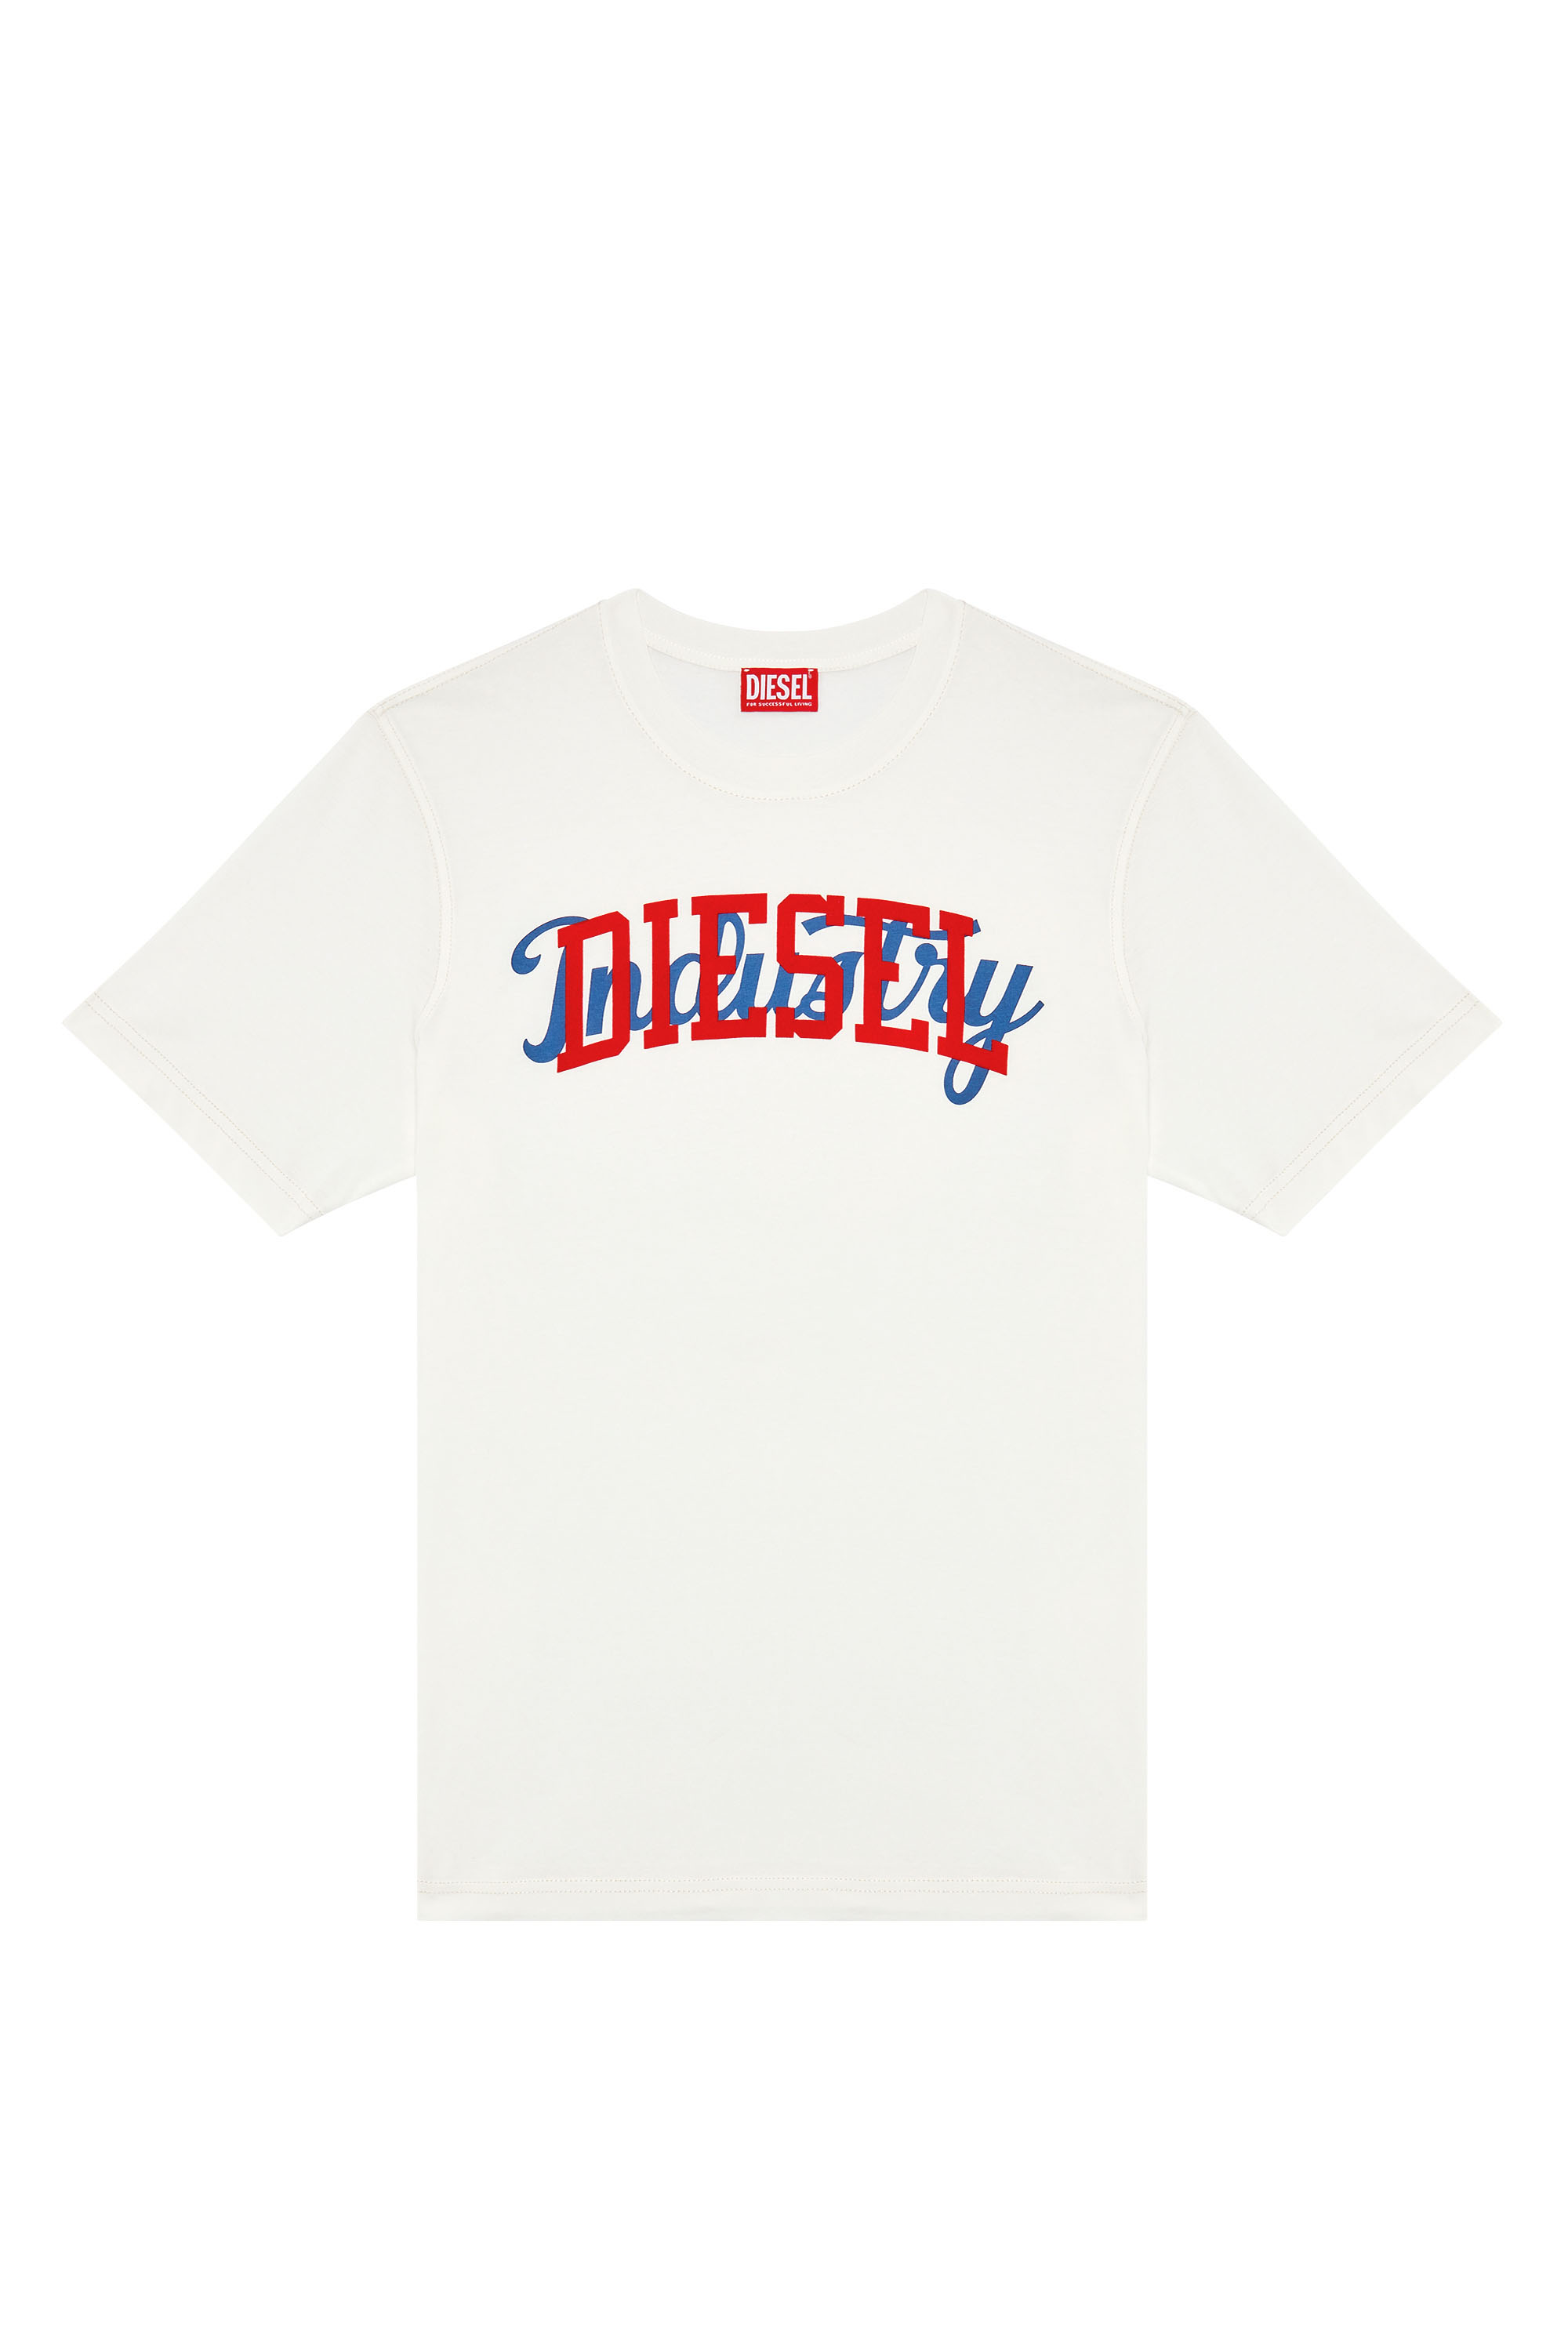 Diesel - T-JUST-N10, Man T-shirt with contrasting Diesel prints in White - Image 3